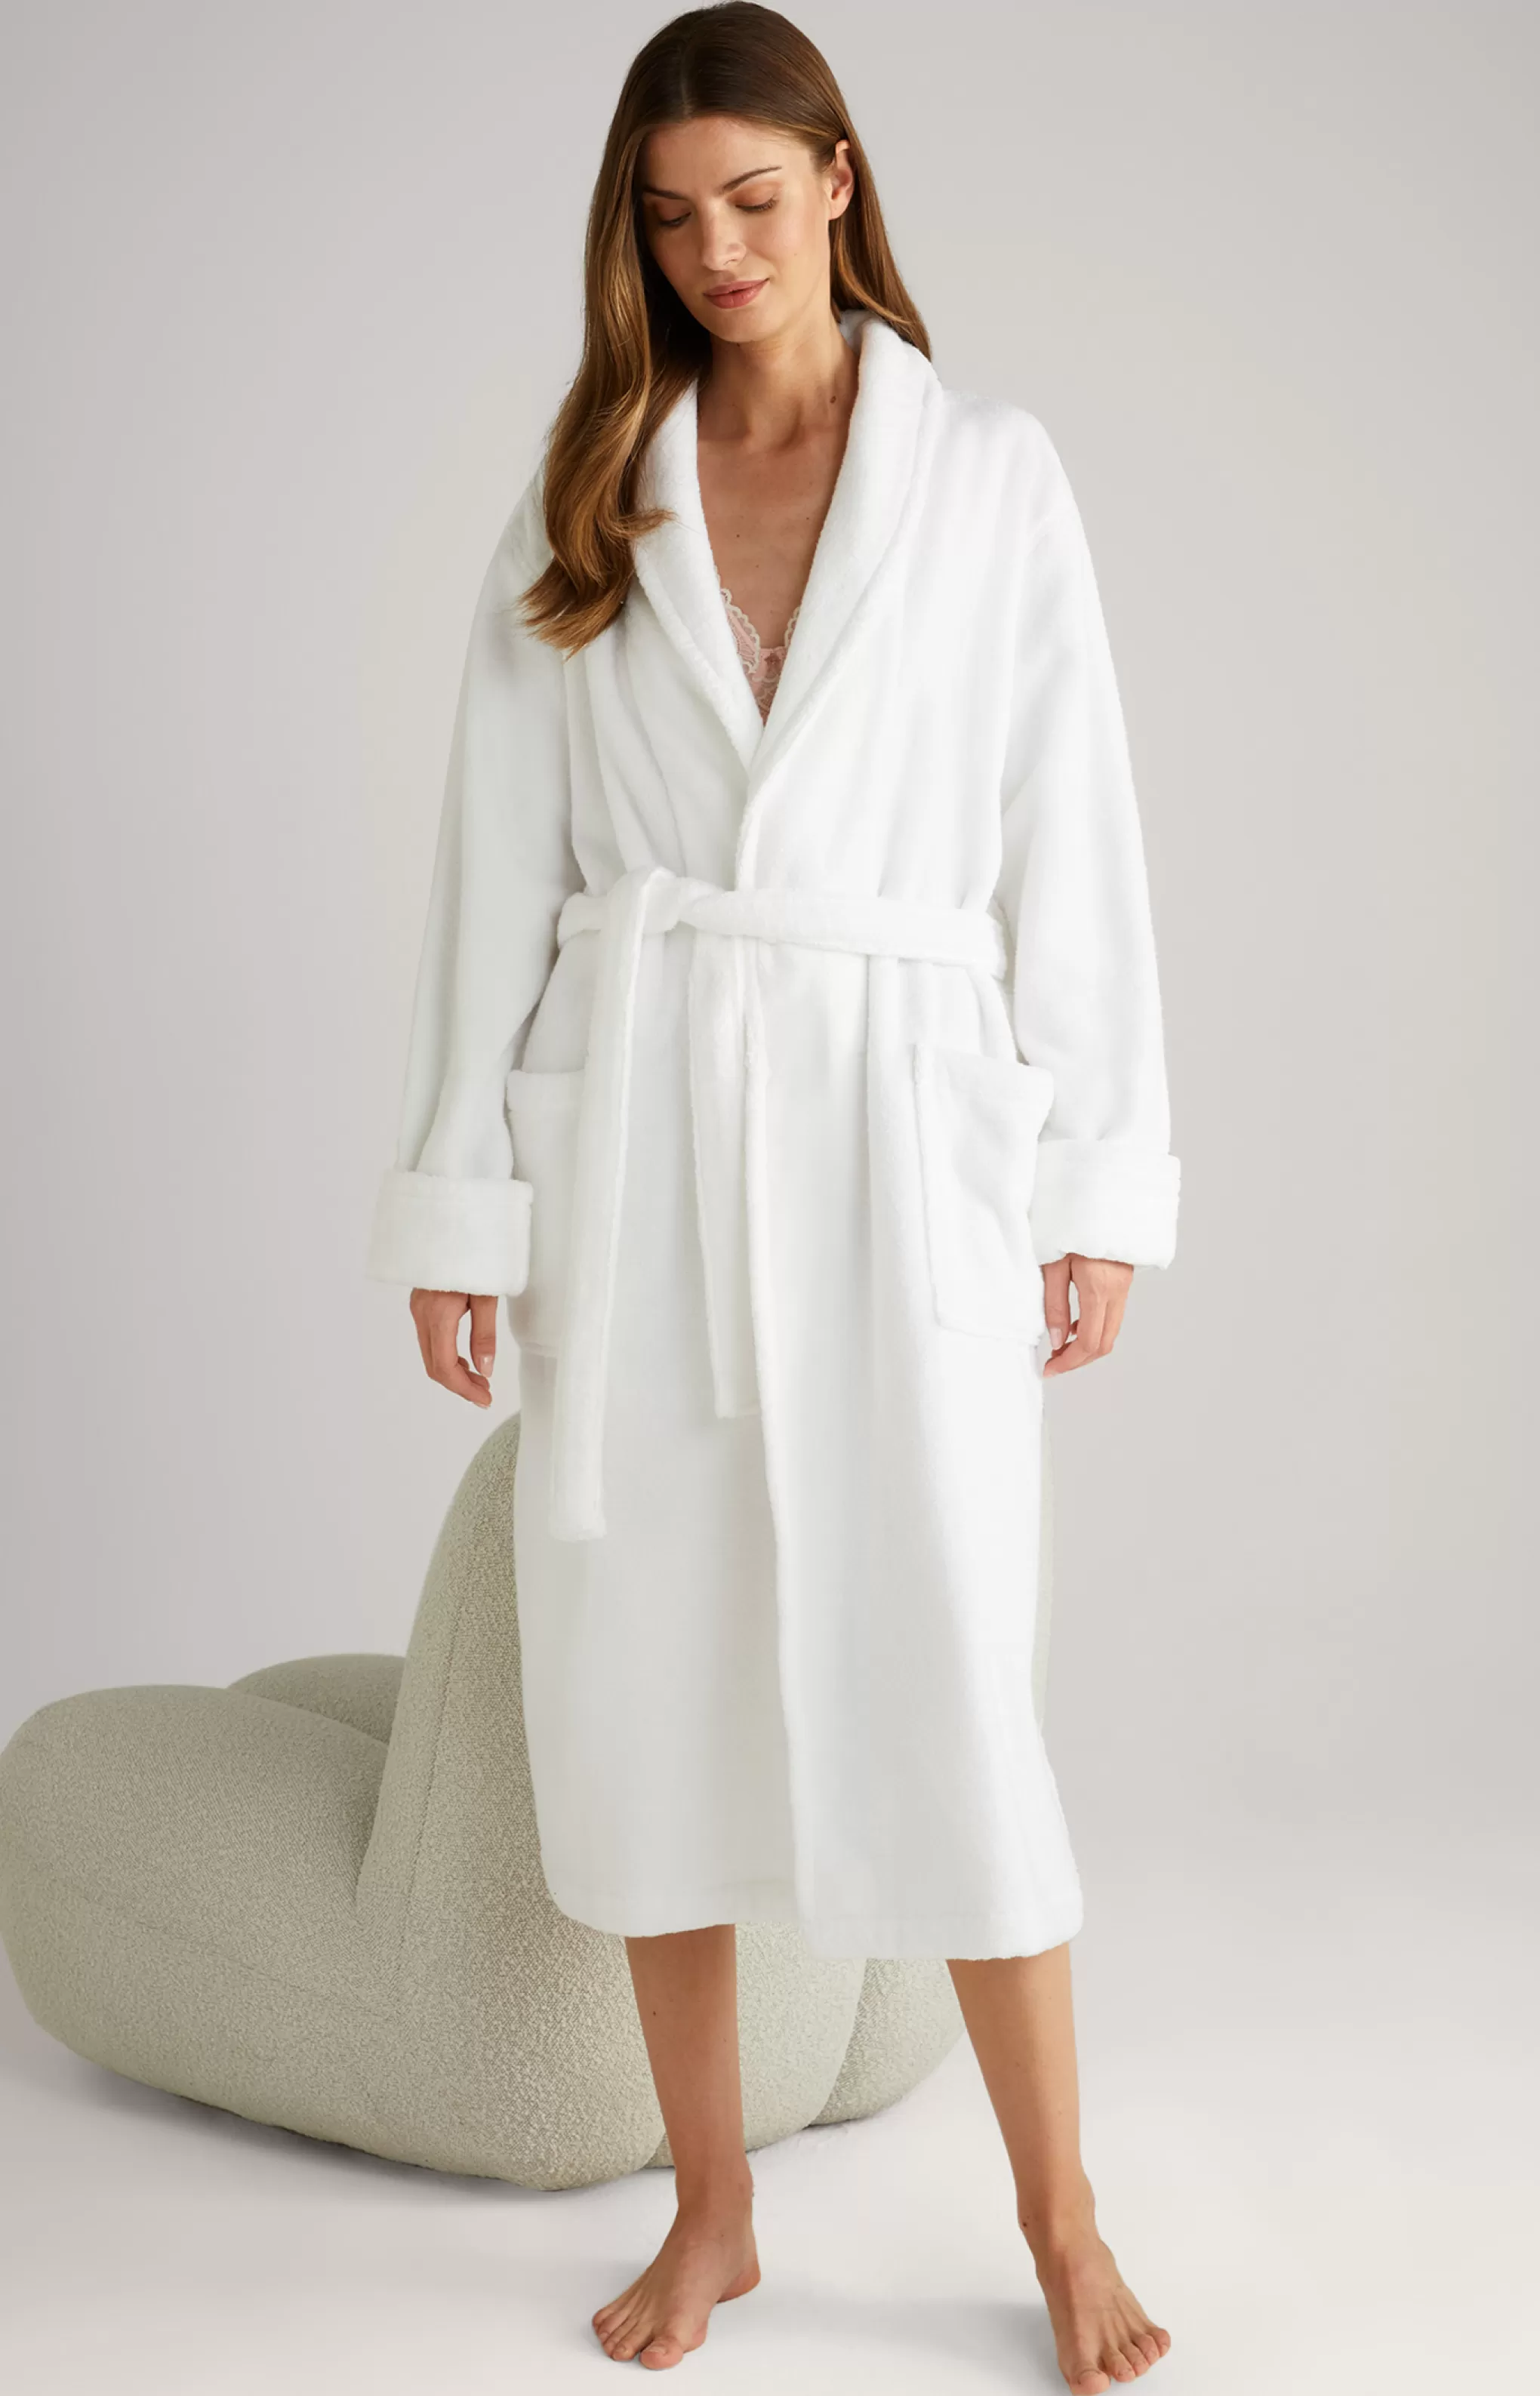 Bathrobes | Loungewear & Nightwear*JOOP Bathrobes | Loungewear & Nightwear Women’s bathrobe in